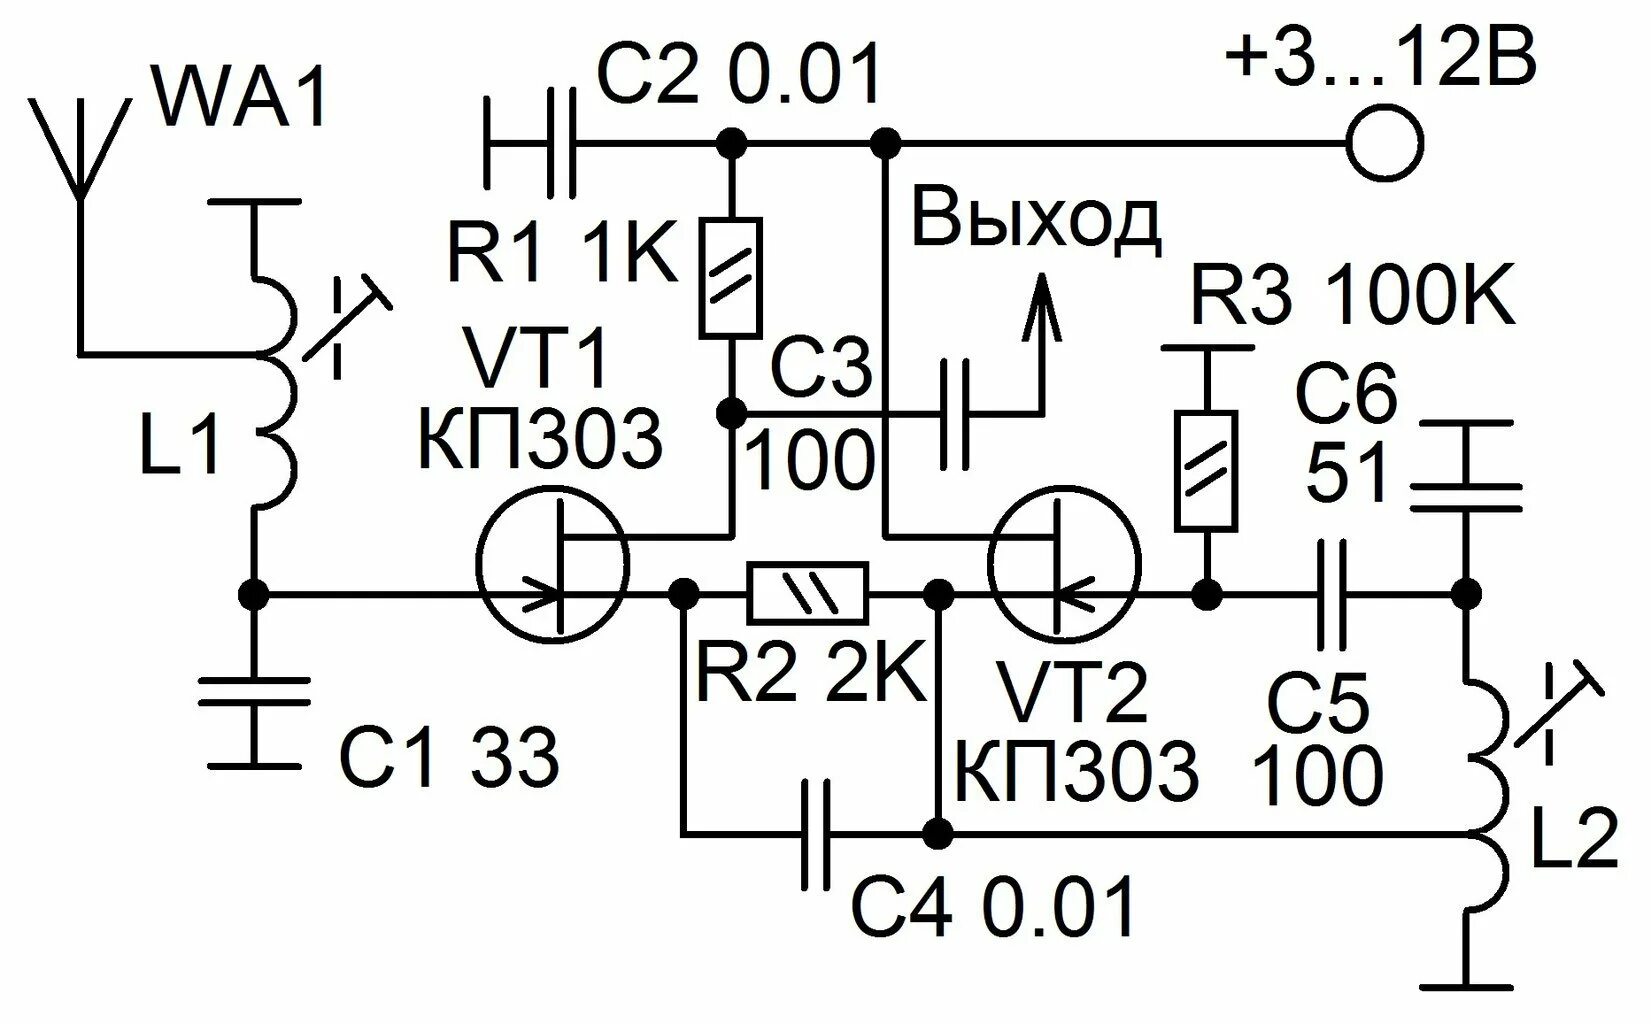 Схема УКВ 88-108мгц приемника на транзисторах. Fm радиоприемник на транзисторах 88 108 МГЦ. Схема приемника прямого усиления на 27 МГЦ. Схема конвертера УКВ fm на транзисторах. Прием фм радио